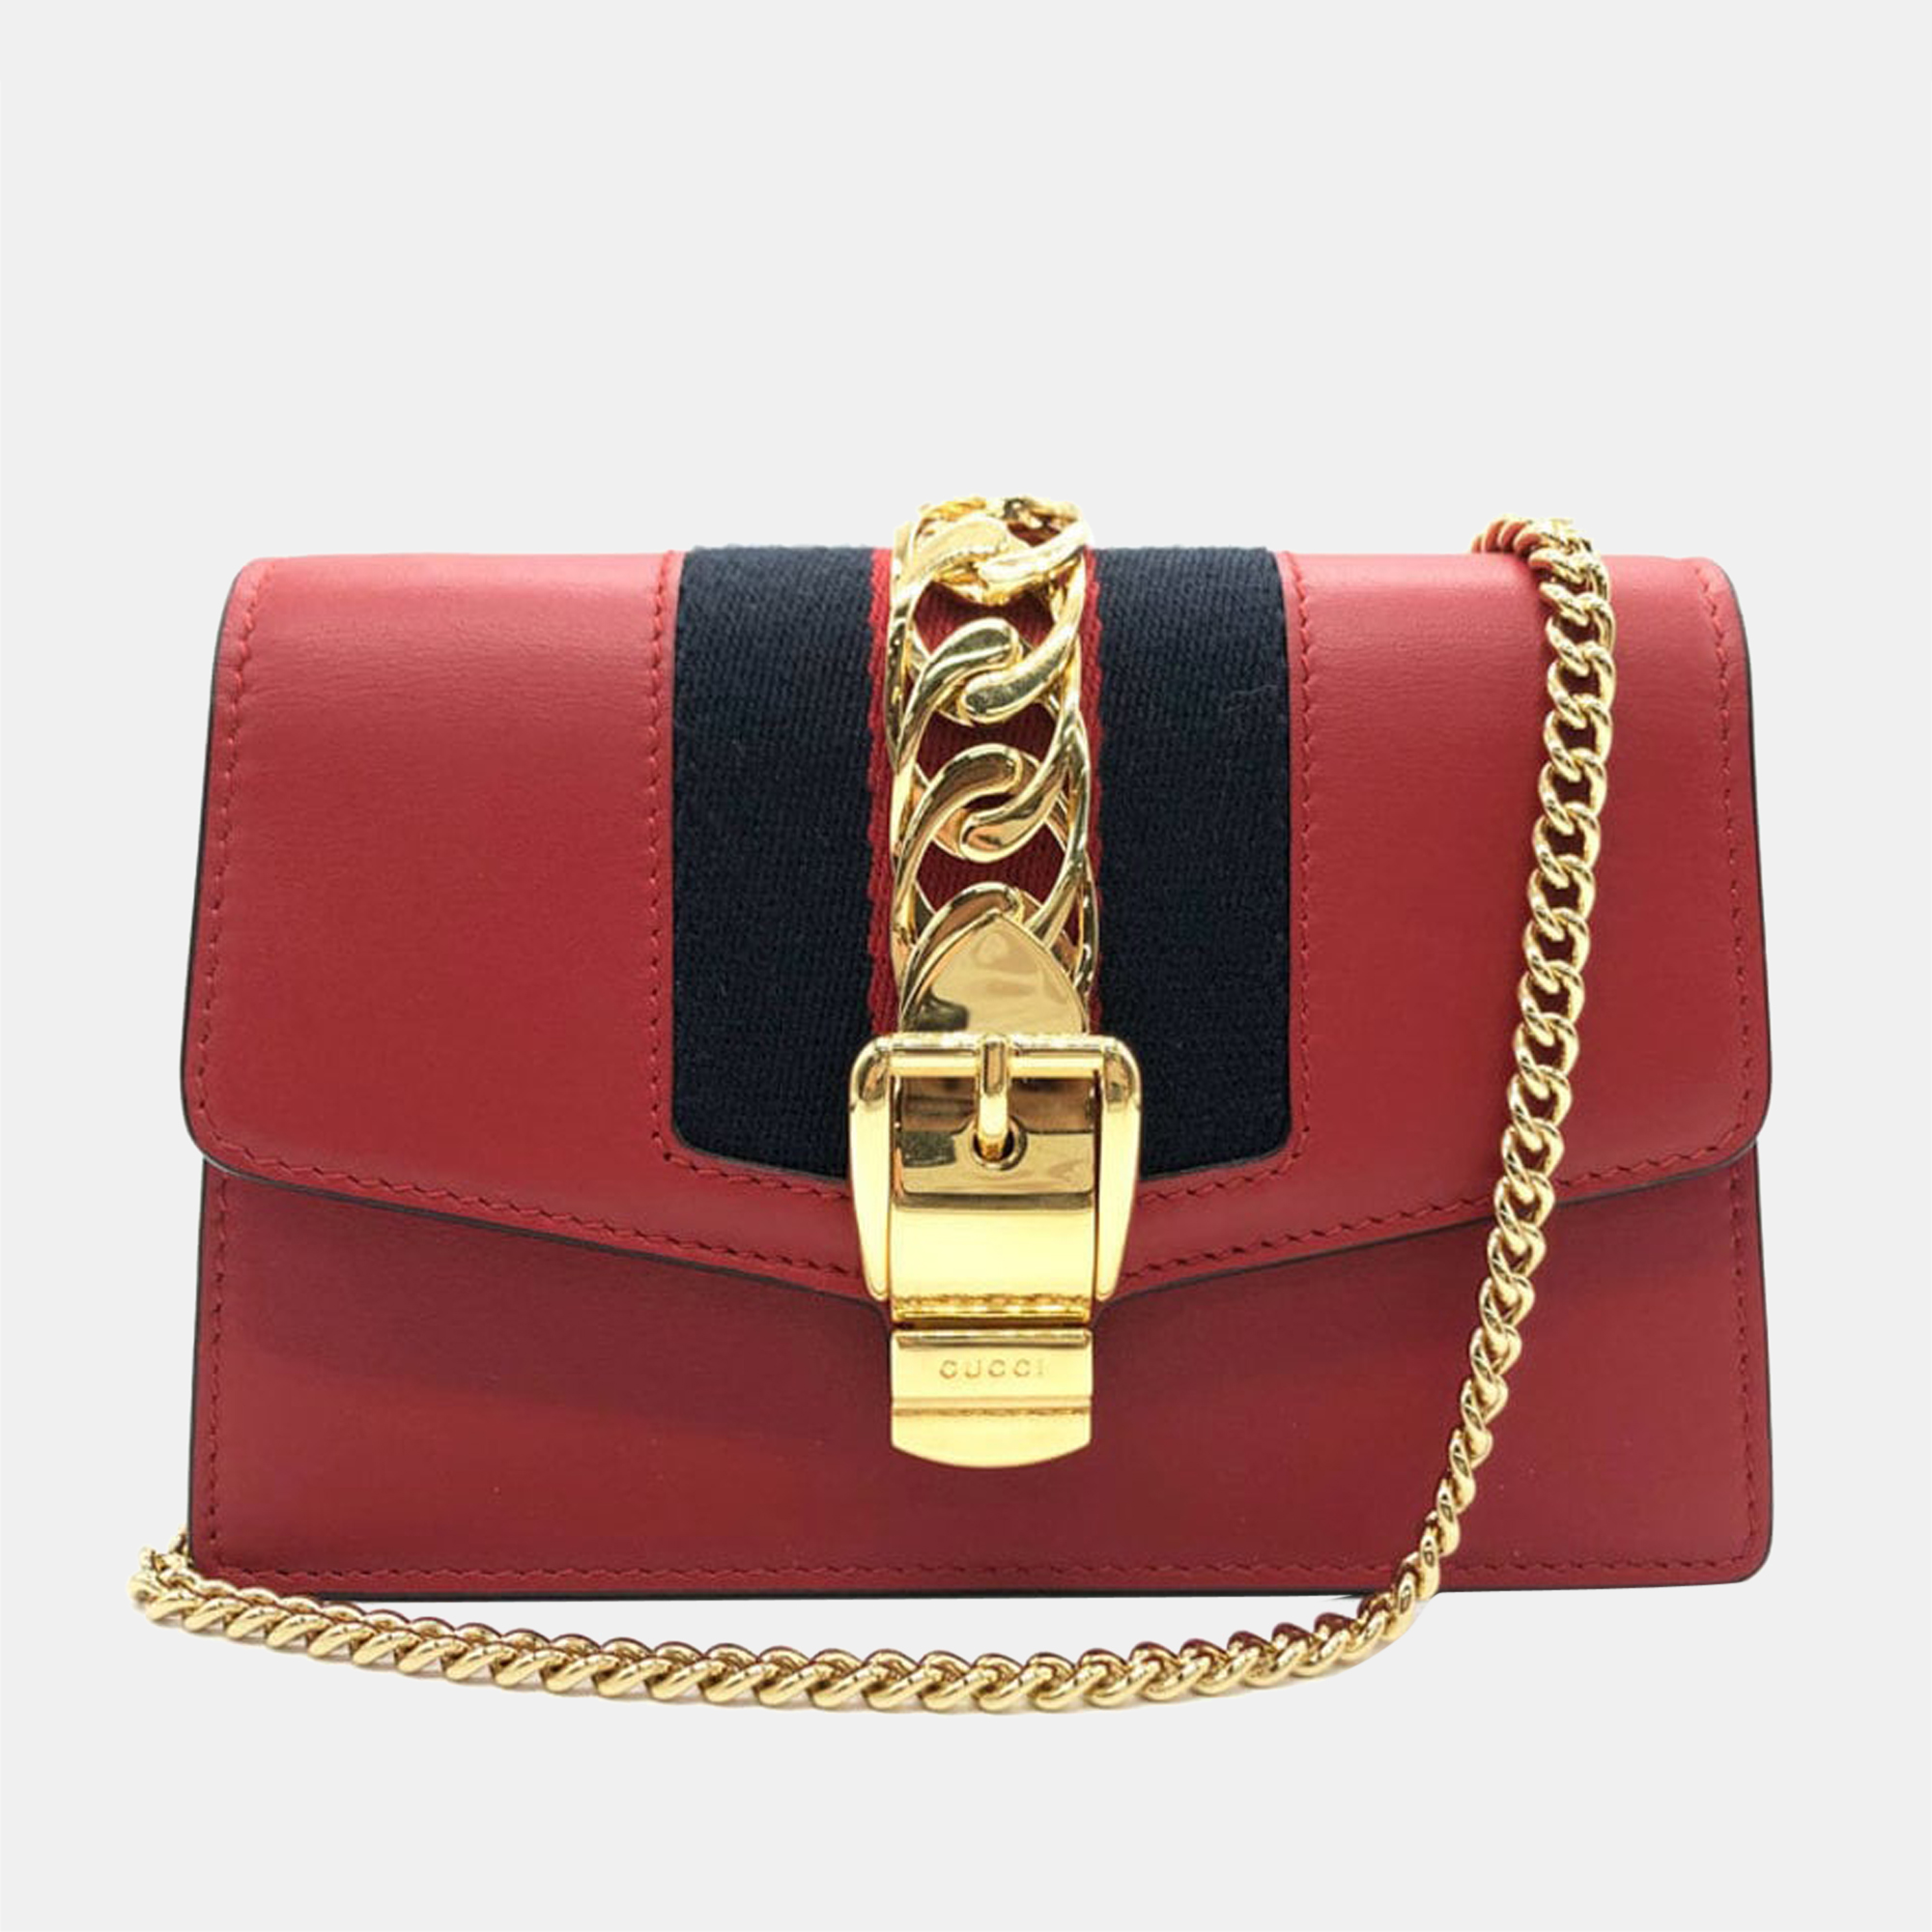 Gucci red leather super mini sylvie chain shoulder bag